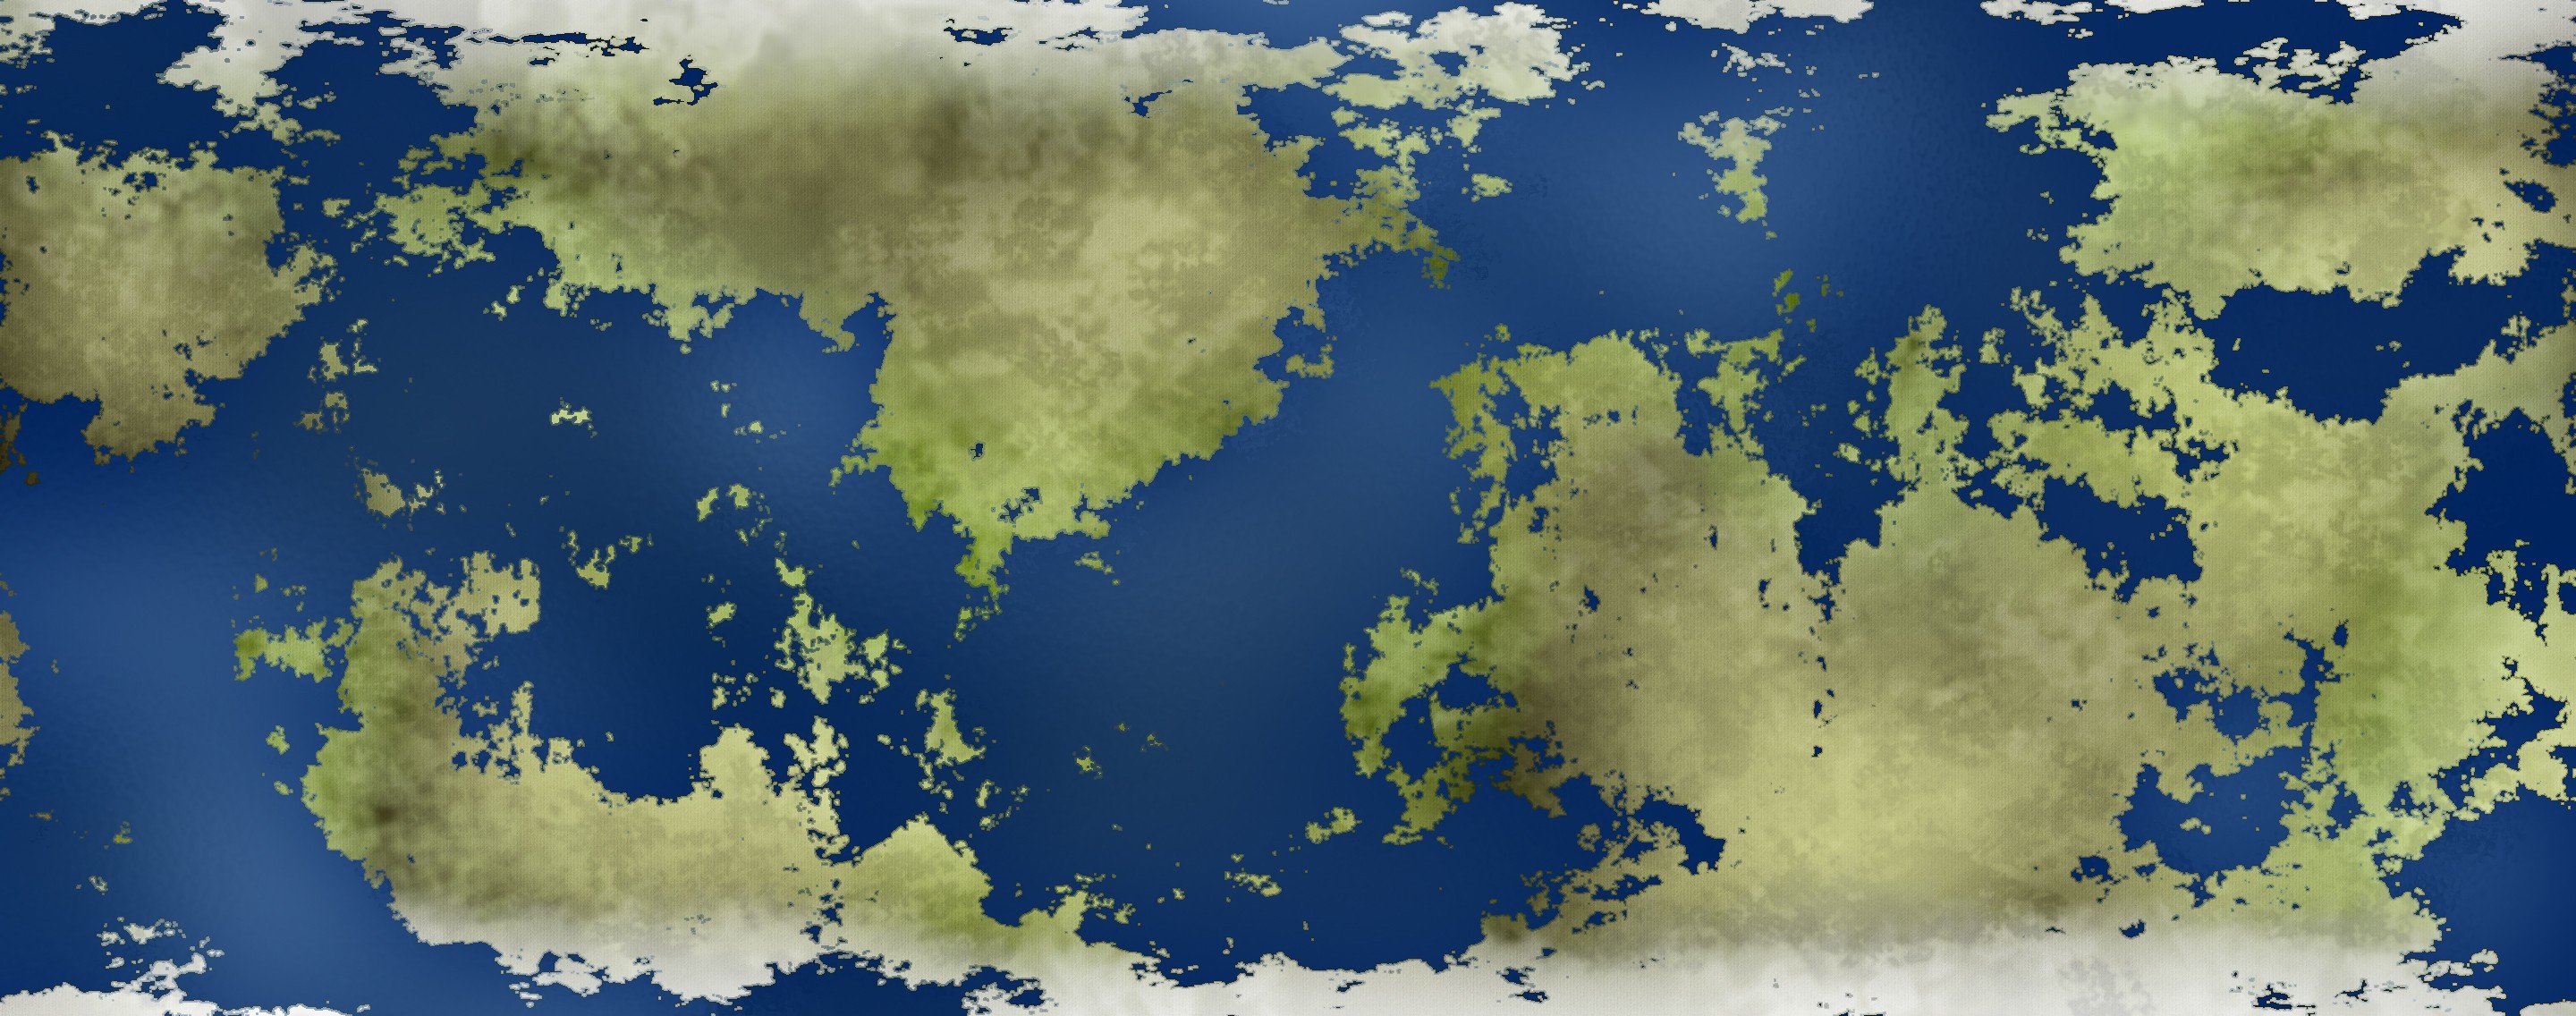 blank map of fantasy world